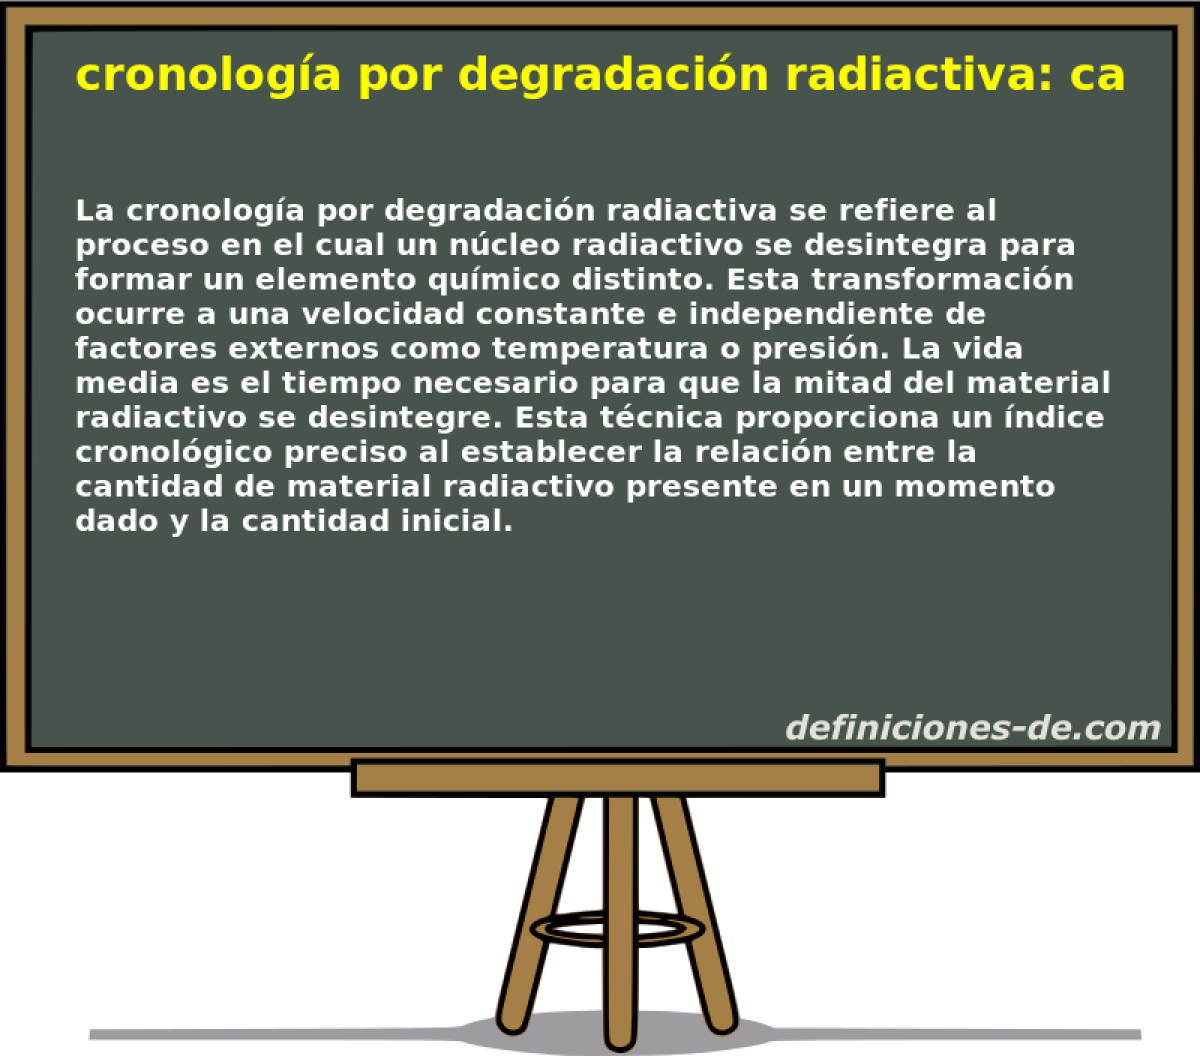 cronologa por degradacin radiactiva: carbono 14, entre otros 